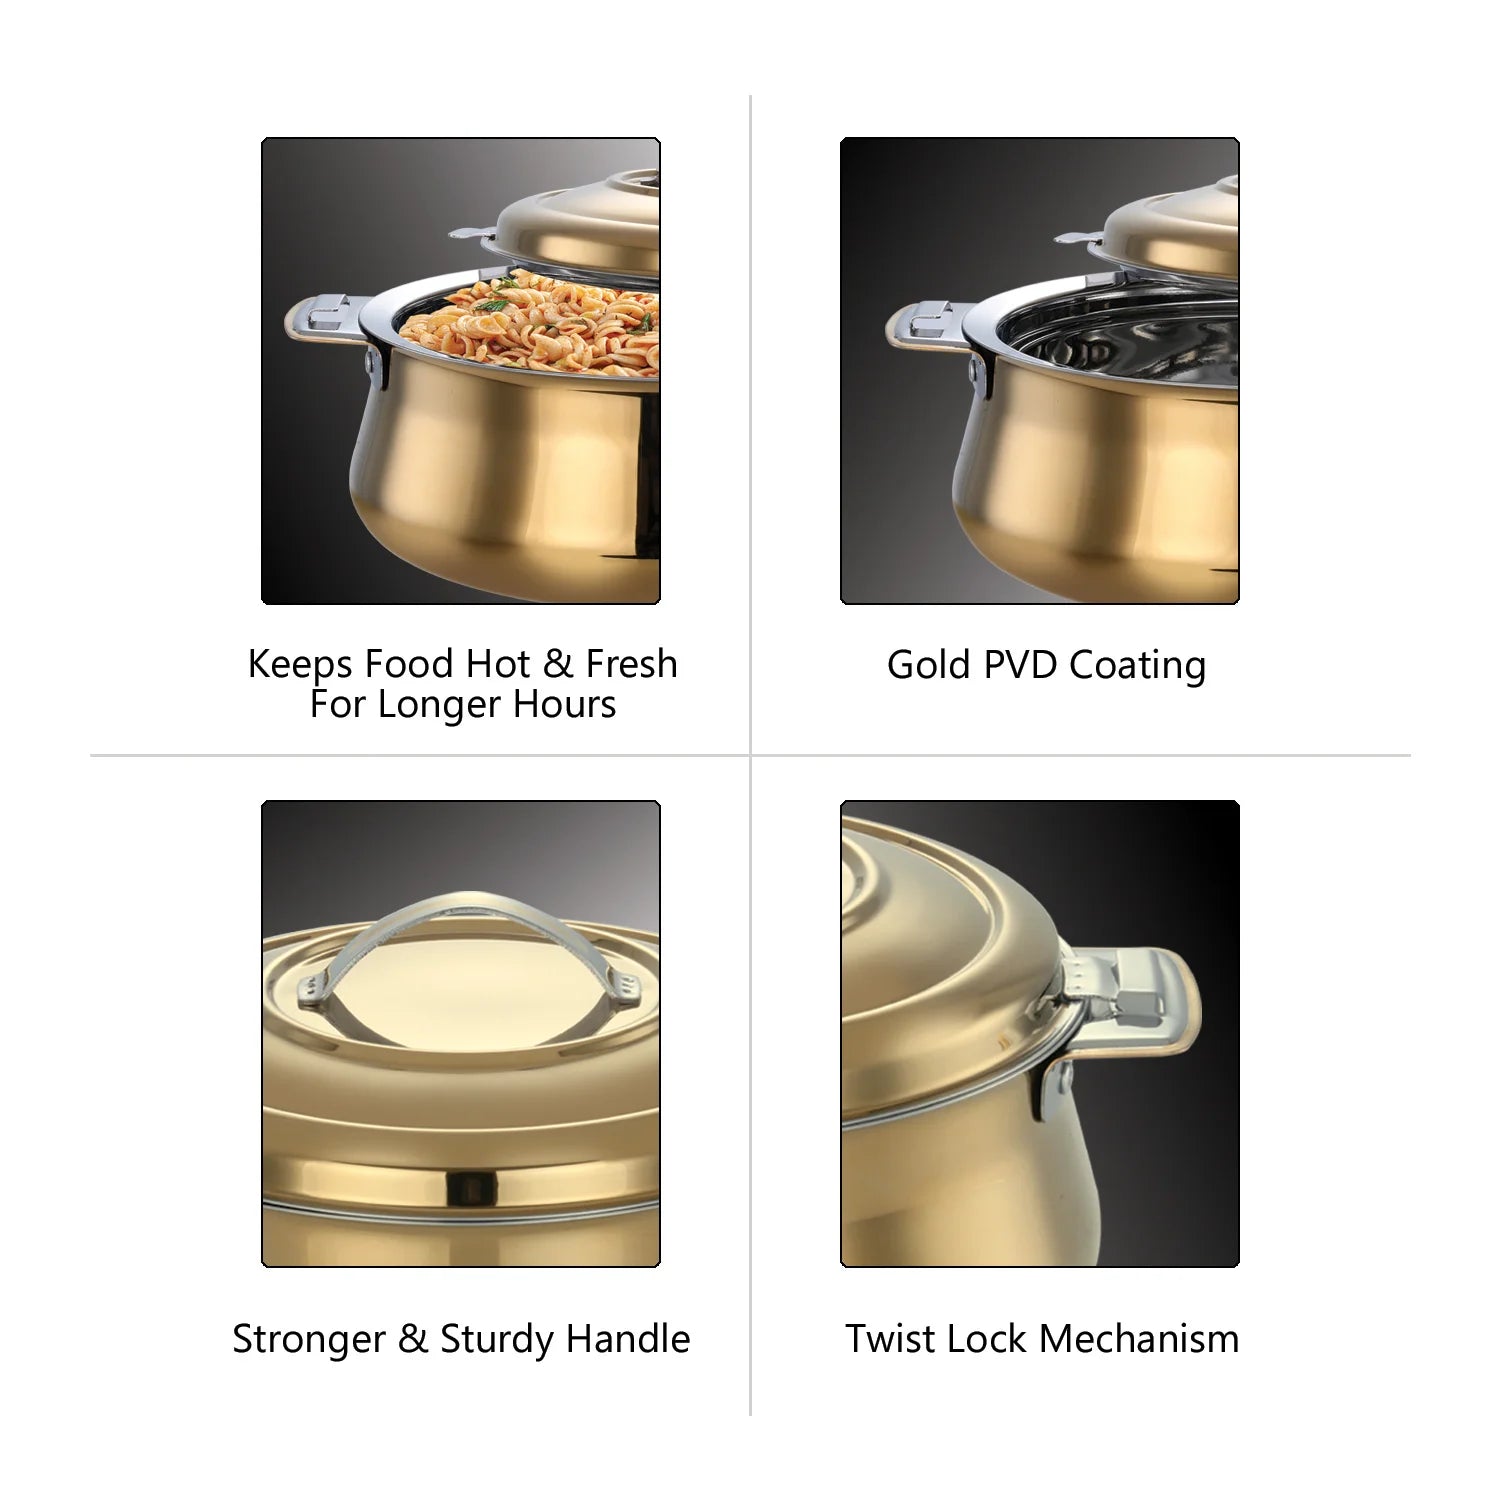 AVIAS Riara Gold Premium Stainless steel casserole features